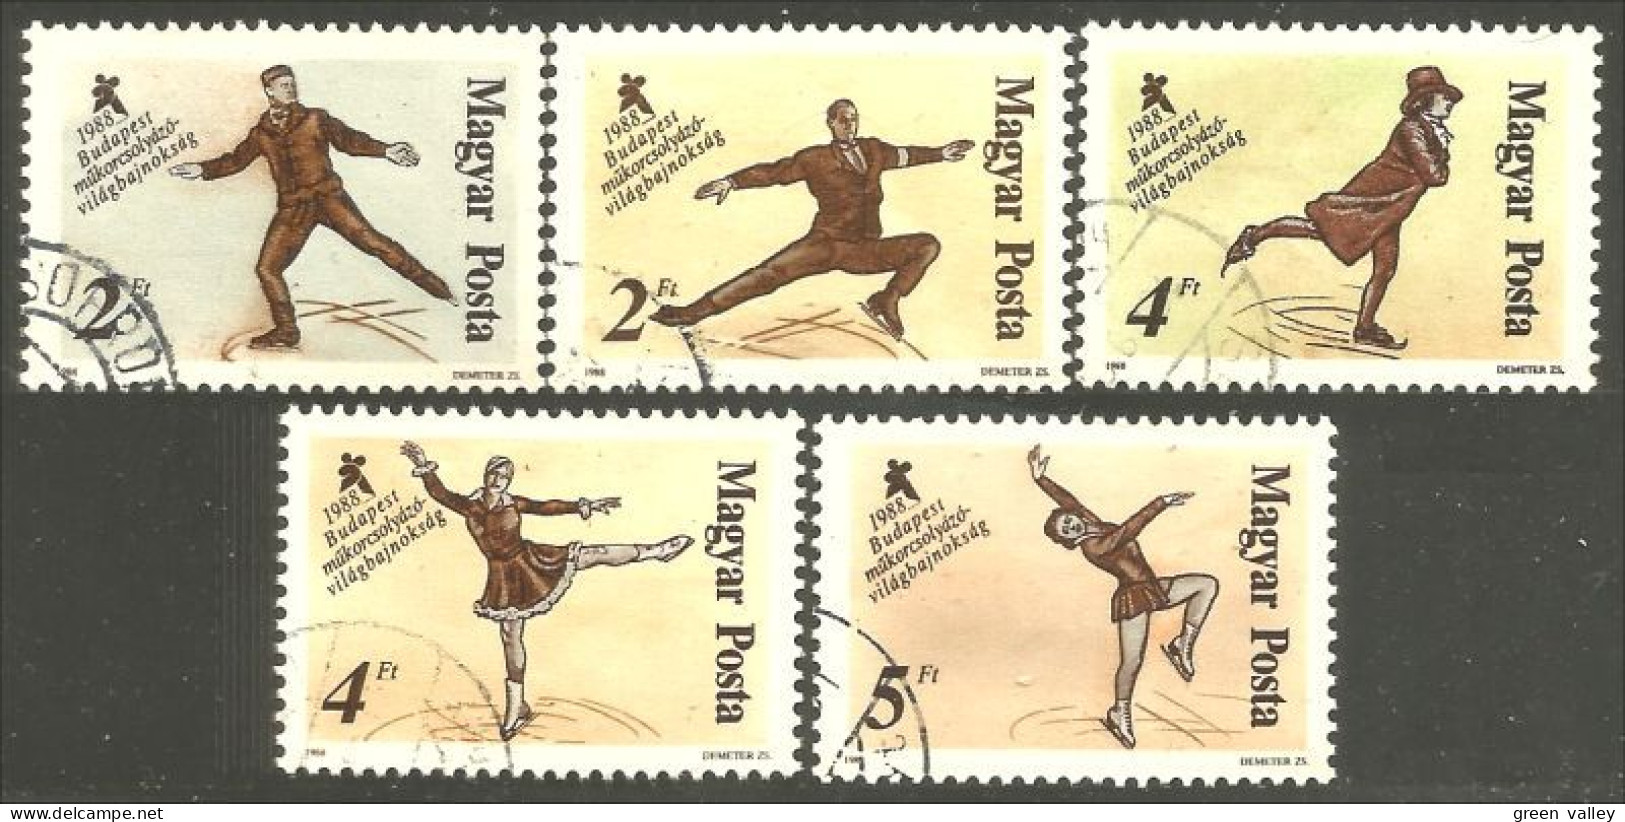 494 Hongrie Patinage Artistique Figure Skating Pattinaggio Artistico Eiskunstlauf (HON-169a) - Used Stamps